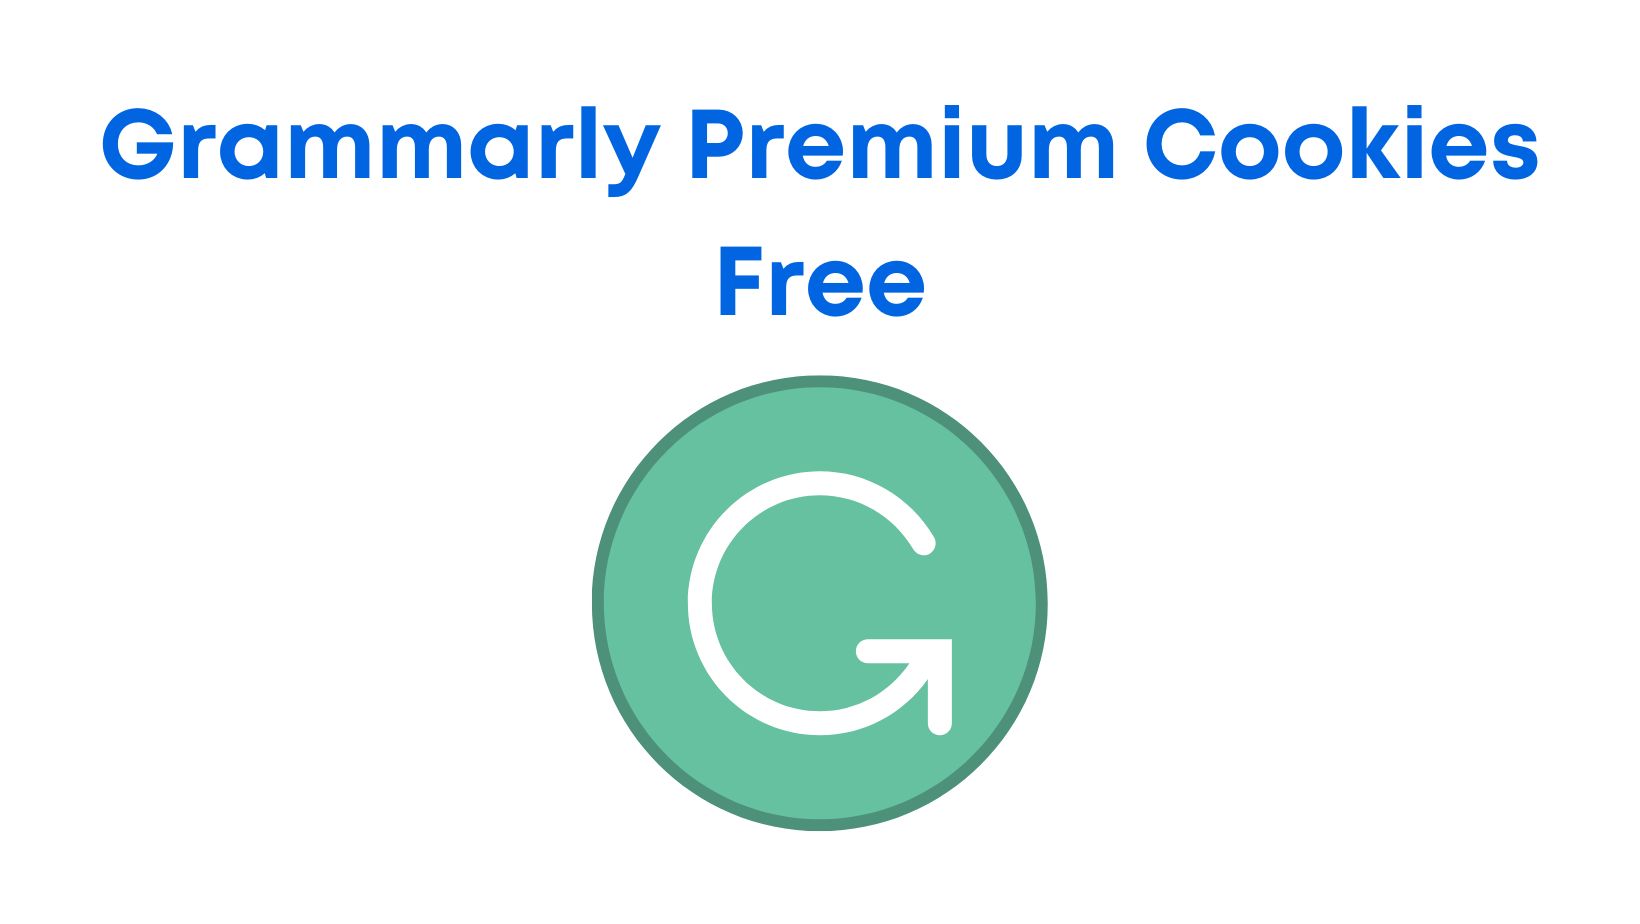 Free Grammarly Premium Cookies